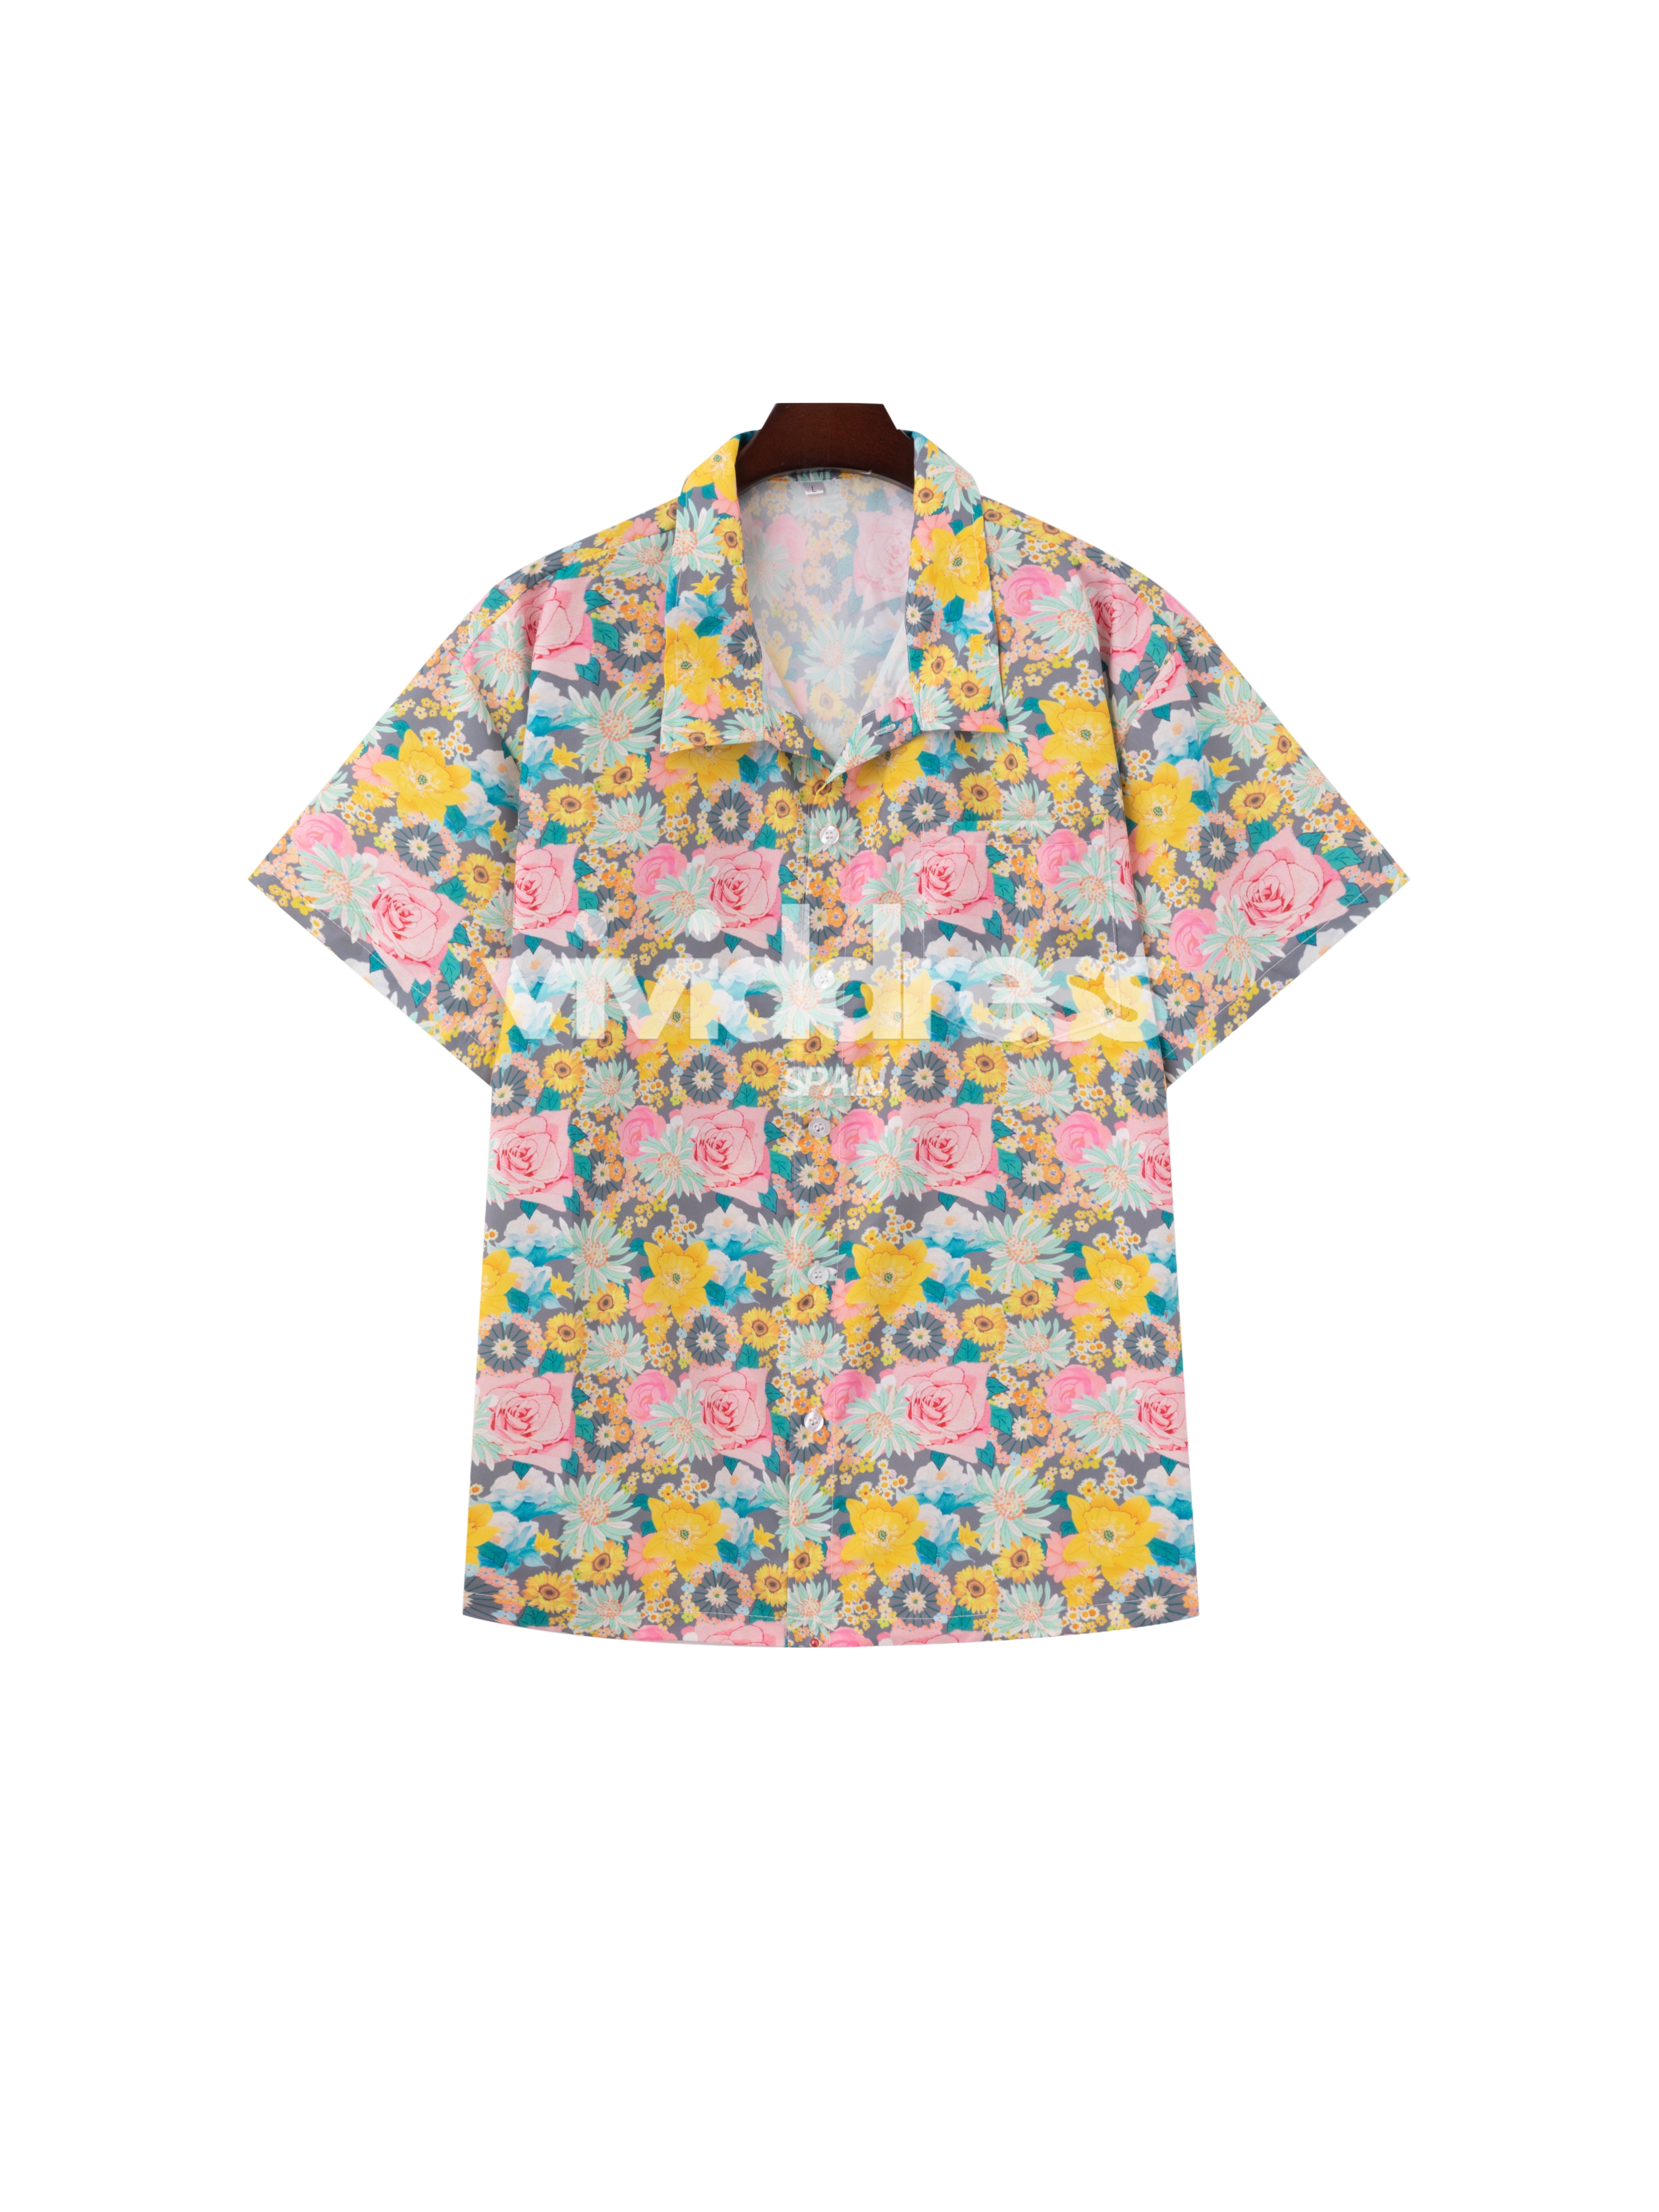 Men's Casual Flower Print Beach Hawaiian Holiday Short Sleeve Shirt